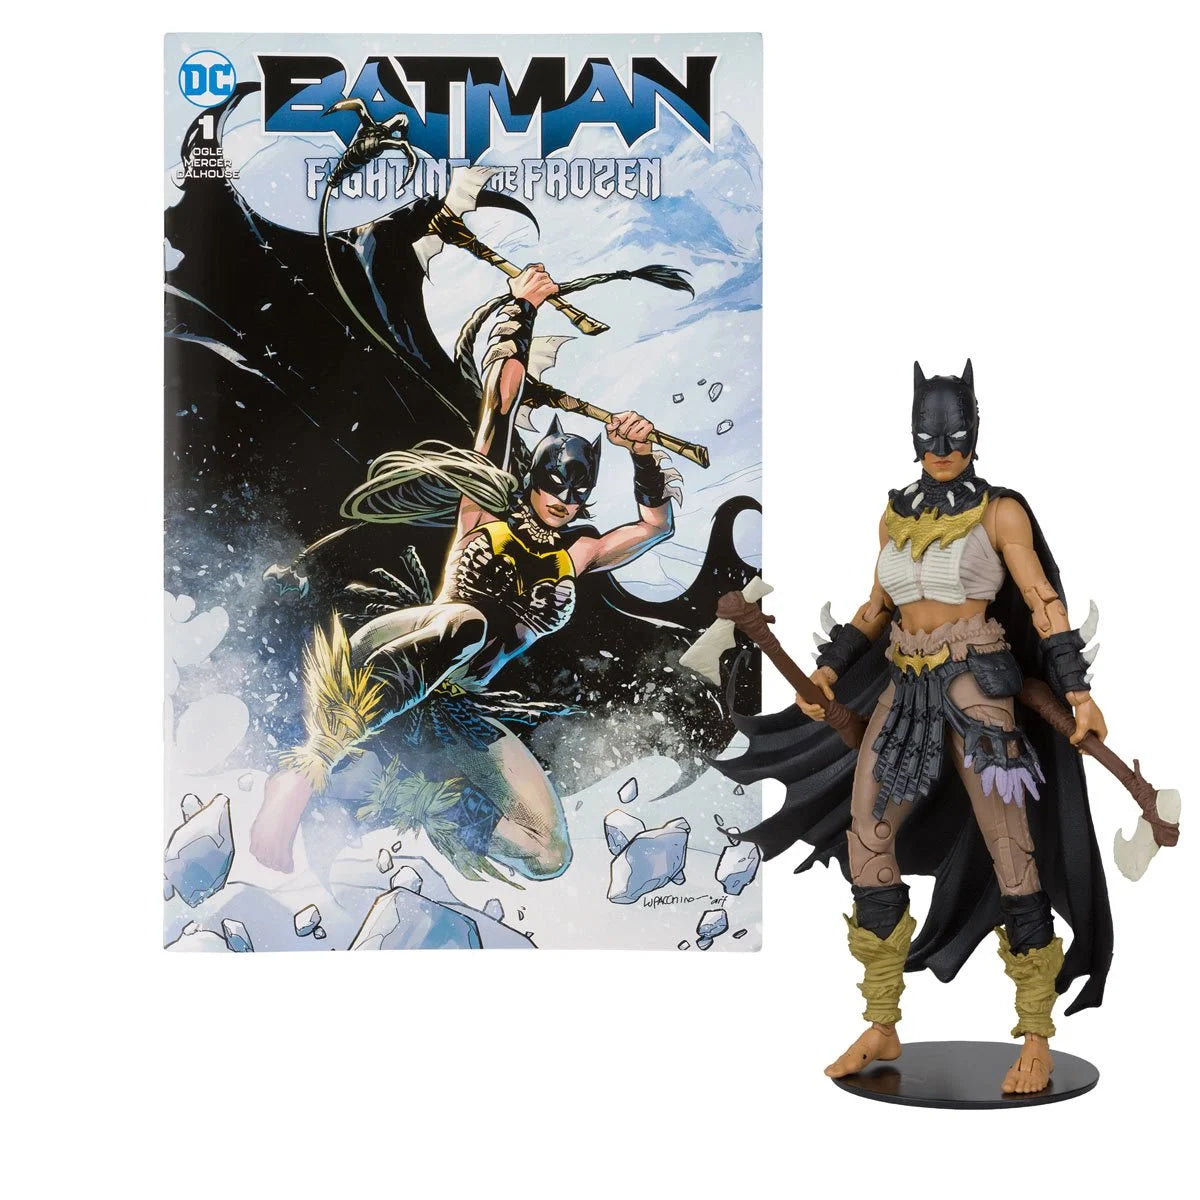 Batman fighting the frozen - Batgirl Action figure with comic book - Heretoserveyou